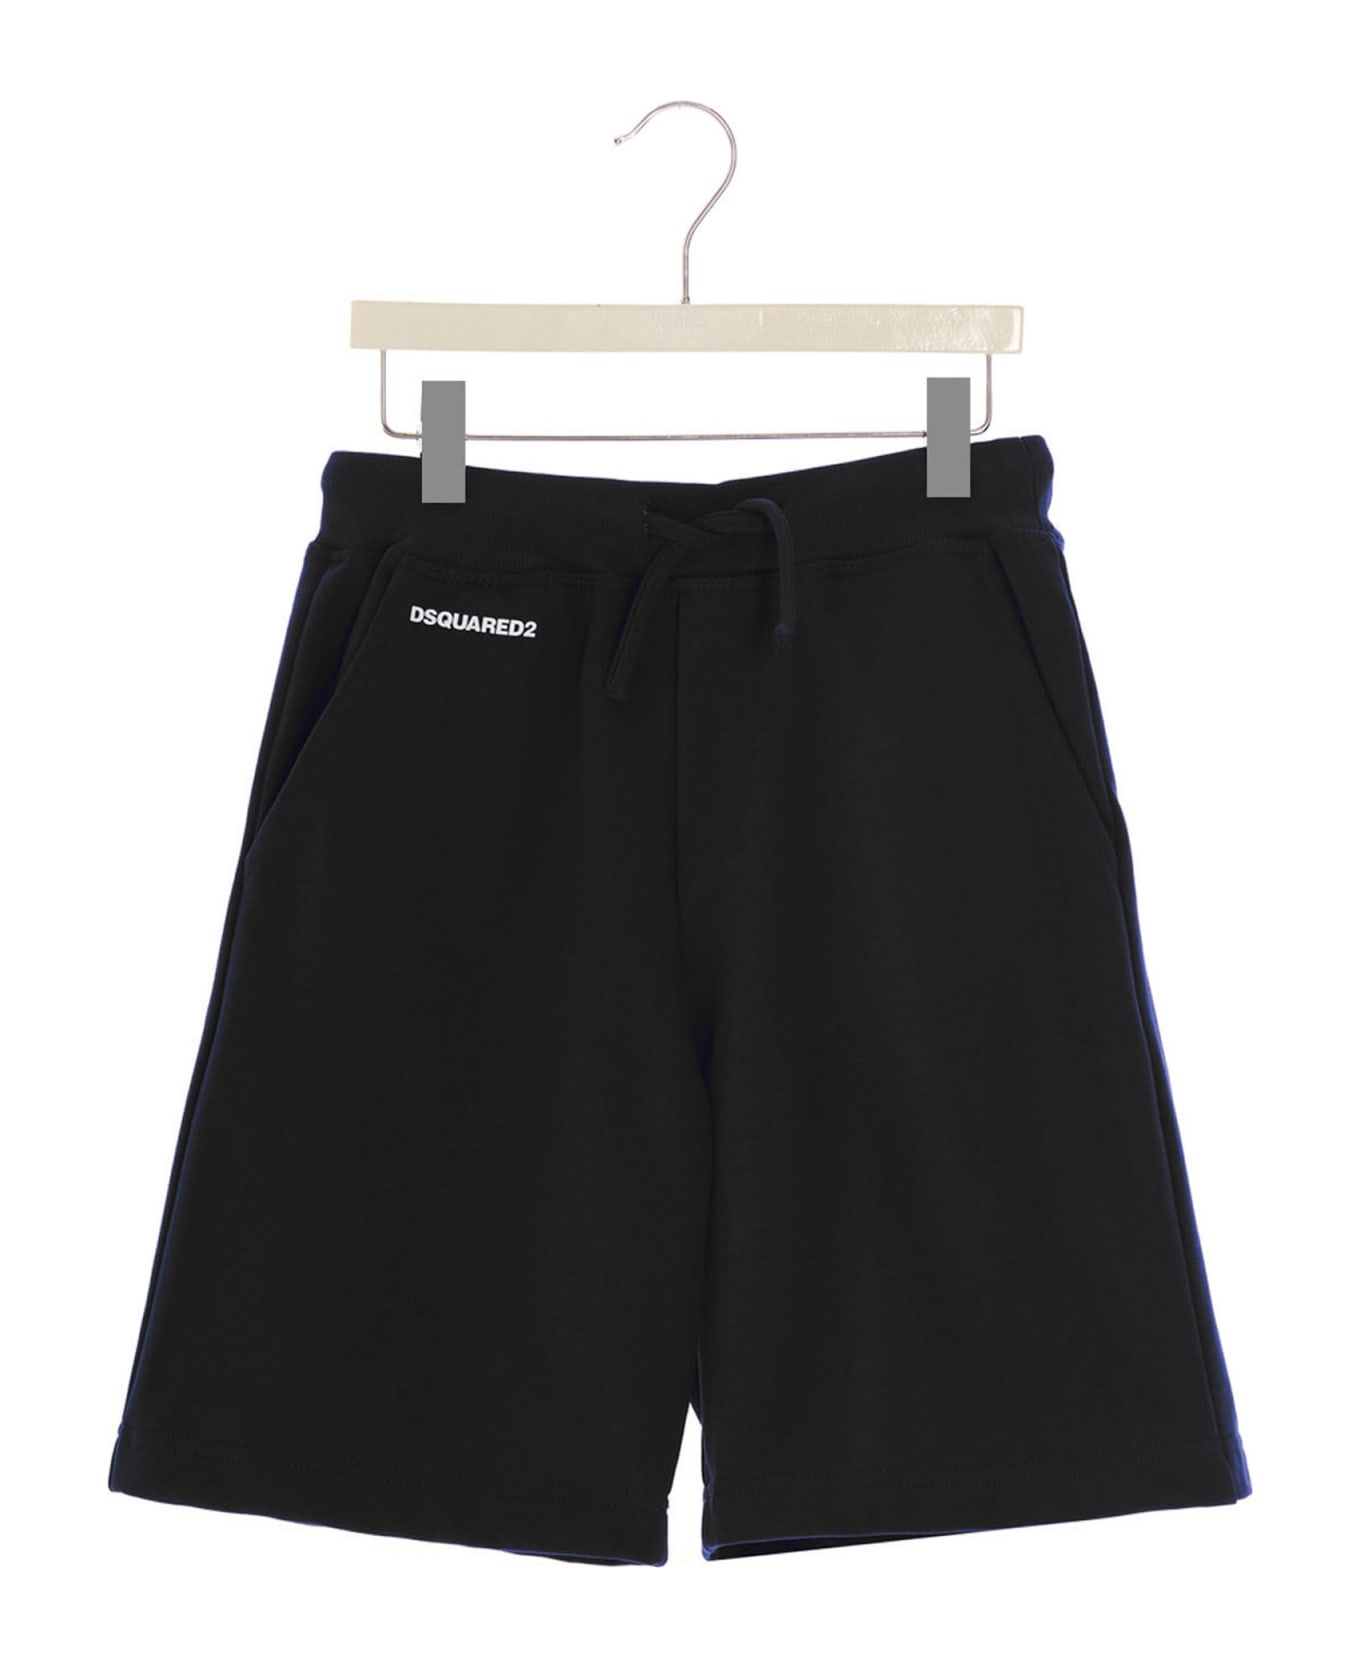 Dsquared2 Logo Bermuda Shorts - White/Black